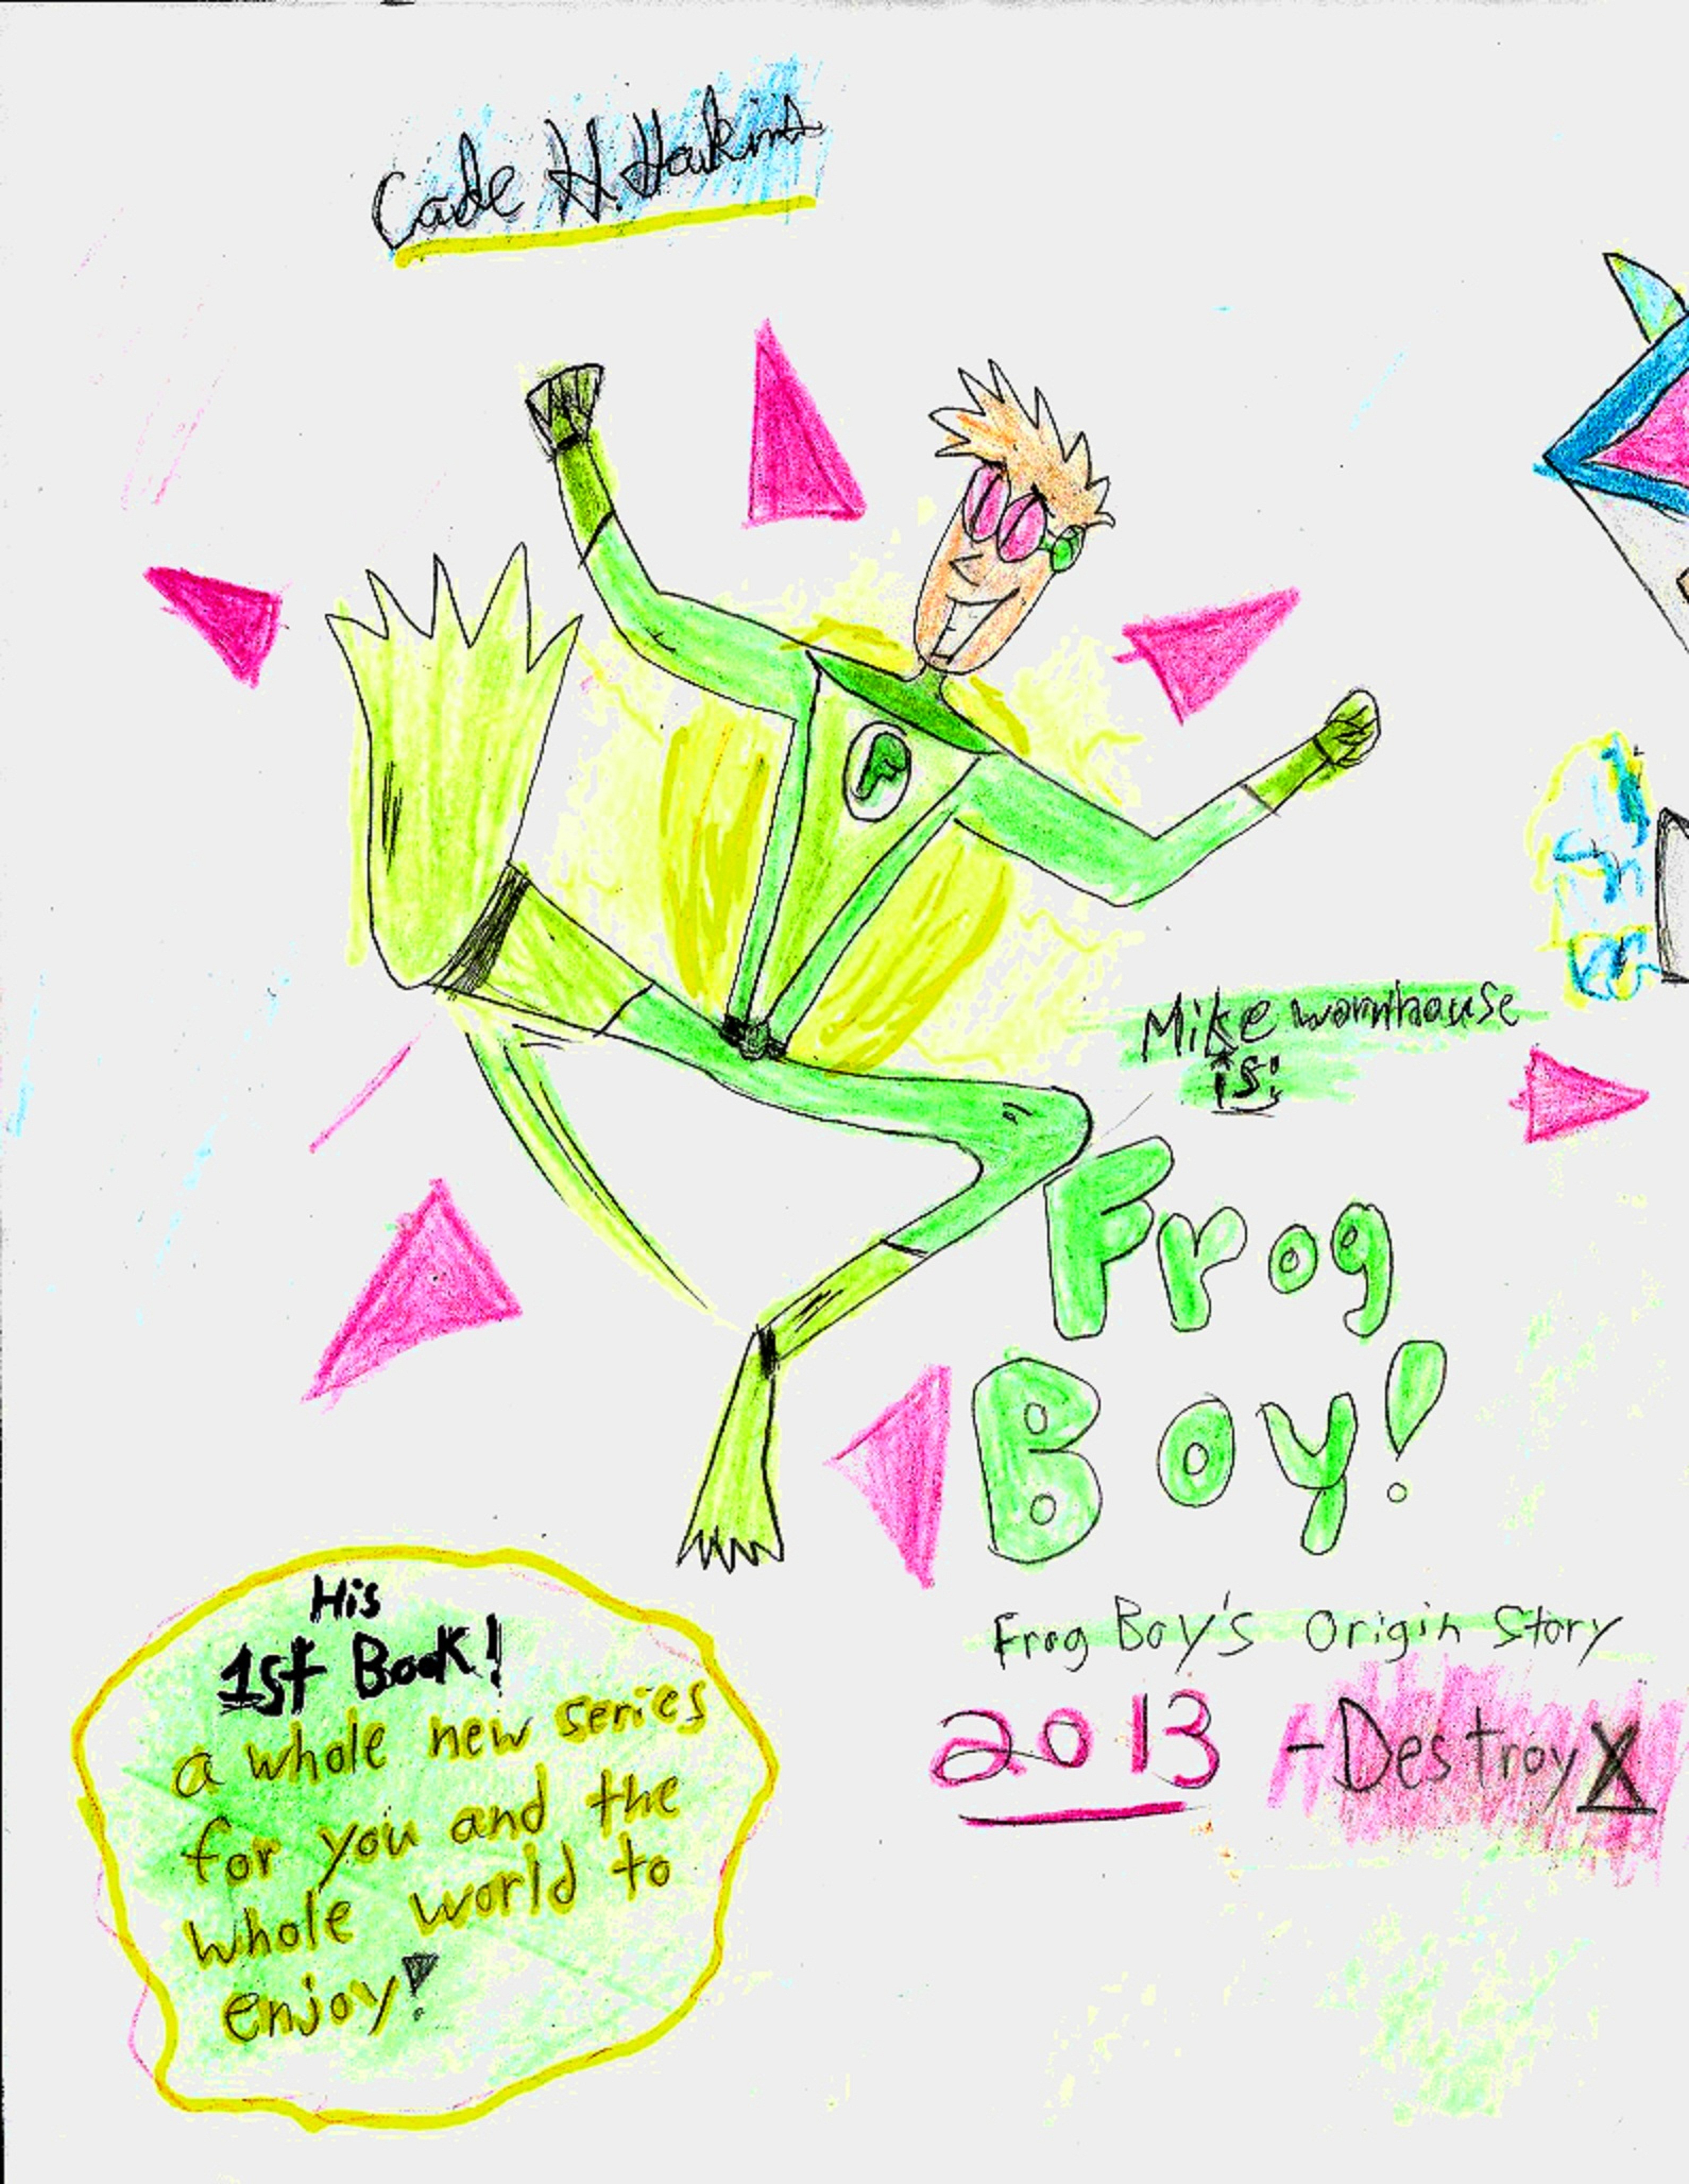 Frog Boy-Frog Boy's Origin story